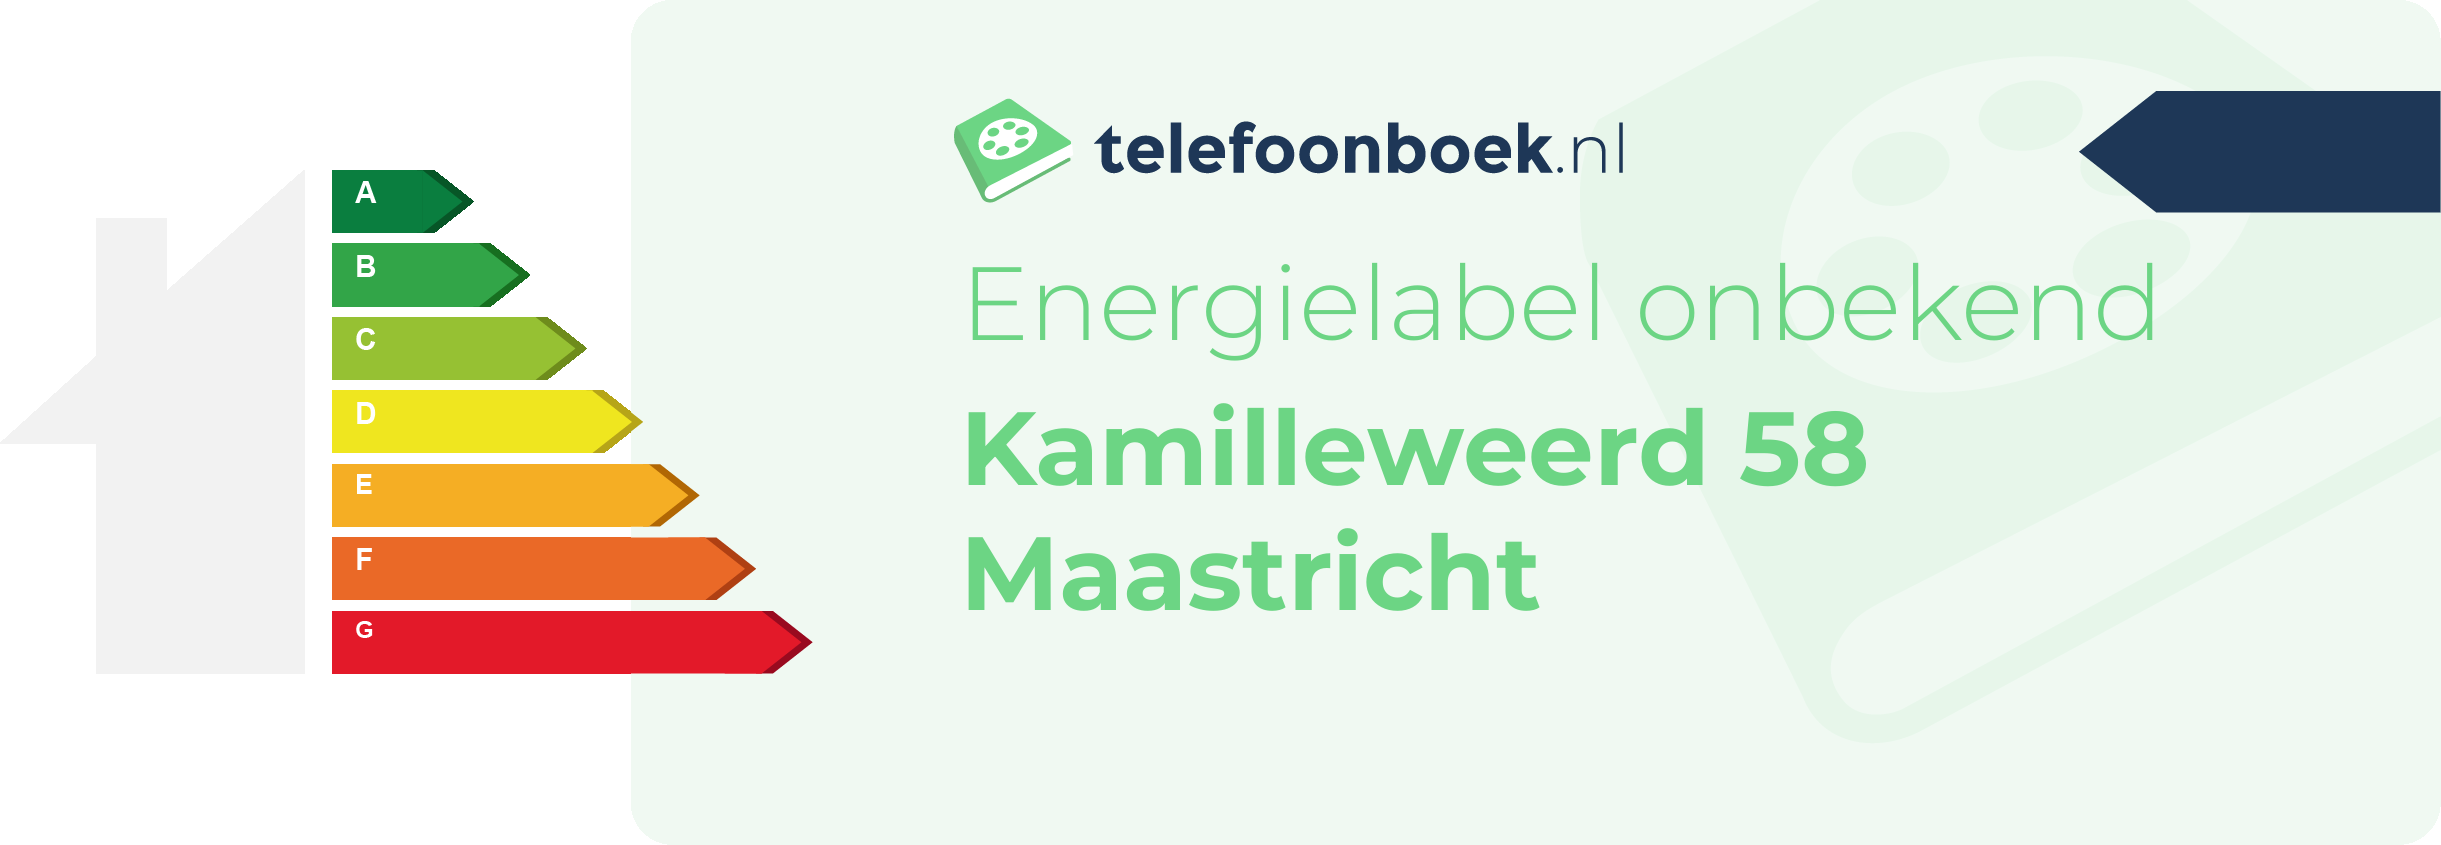 Energielabel Kamilleweerd 58 Maastricht